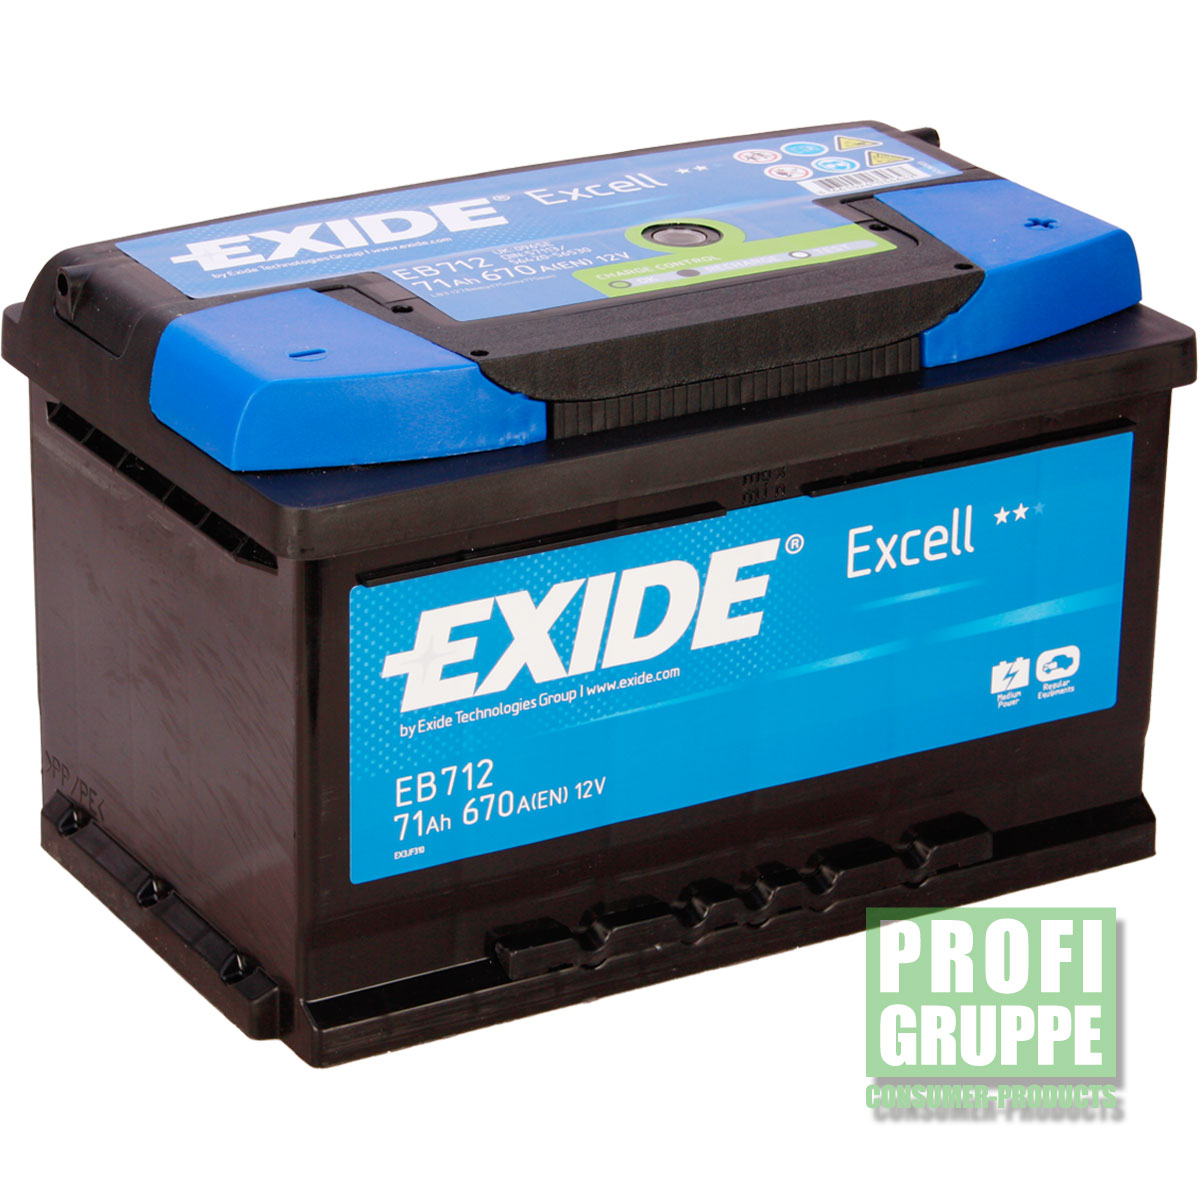 EXIDE EXCELL / 71Ah / Autobatterie / Starterbatterie / Batterie